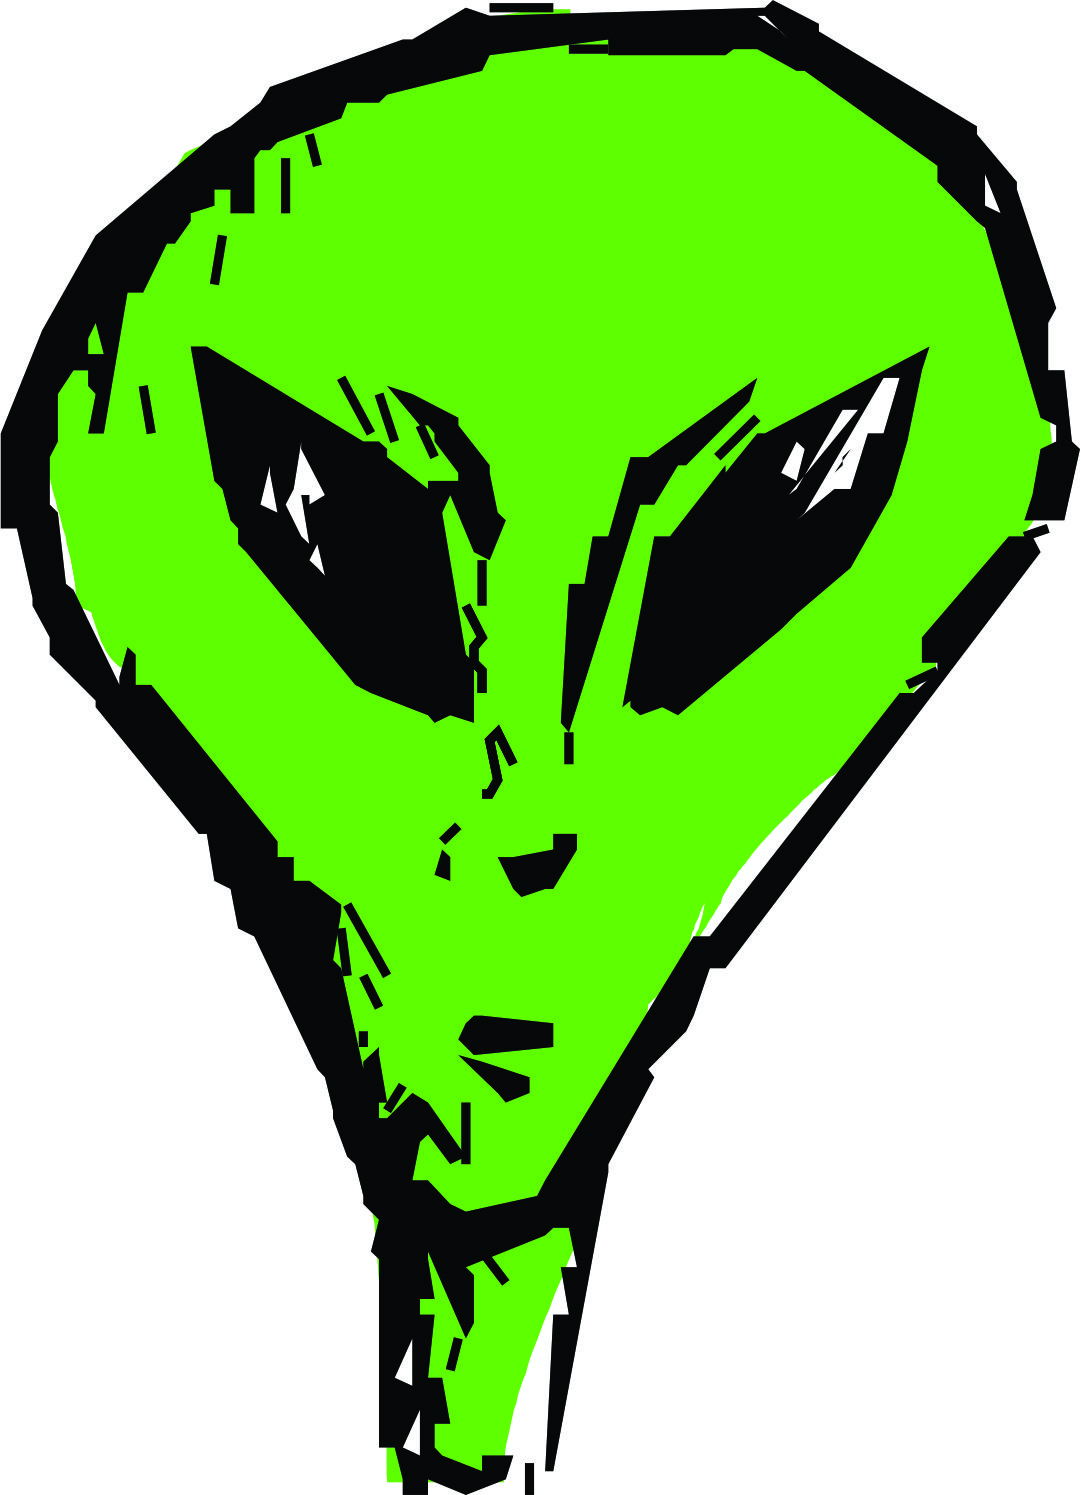 Green Alien Cartoon Images  Pictures - Becuo